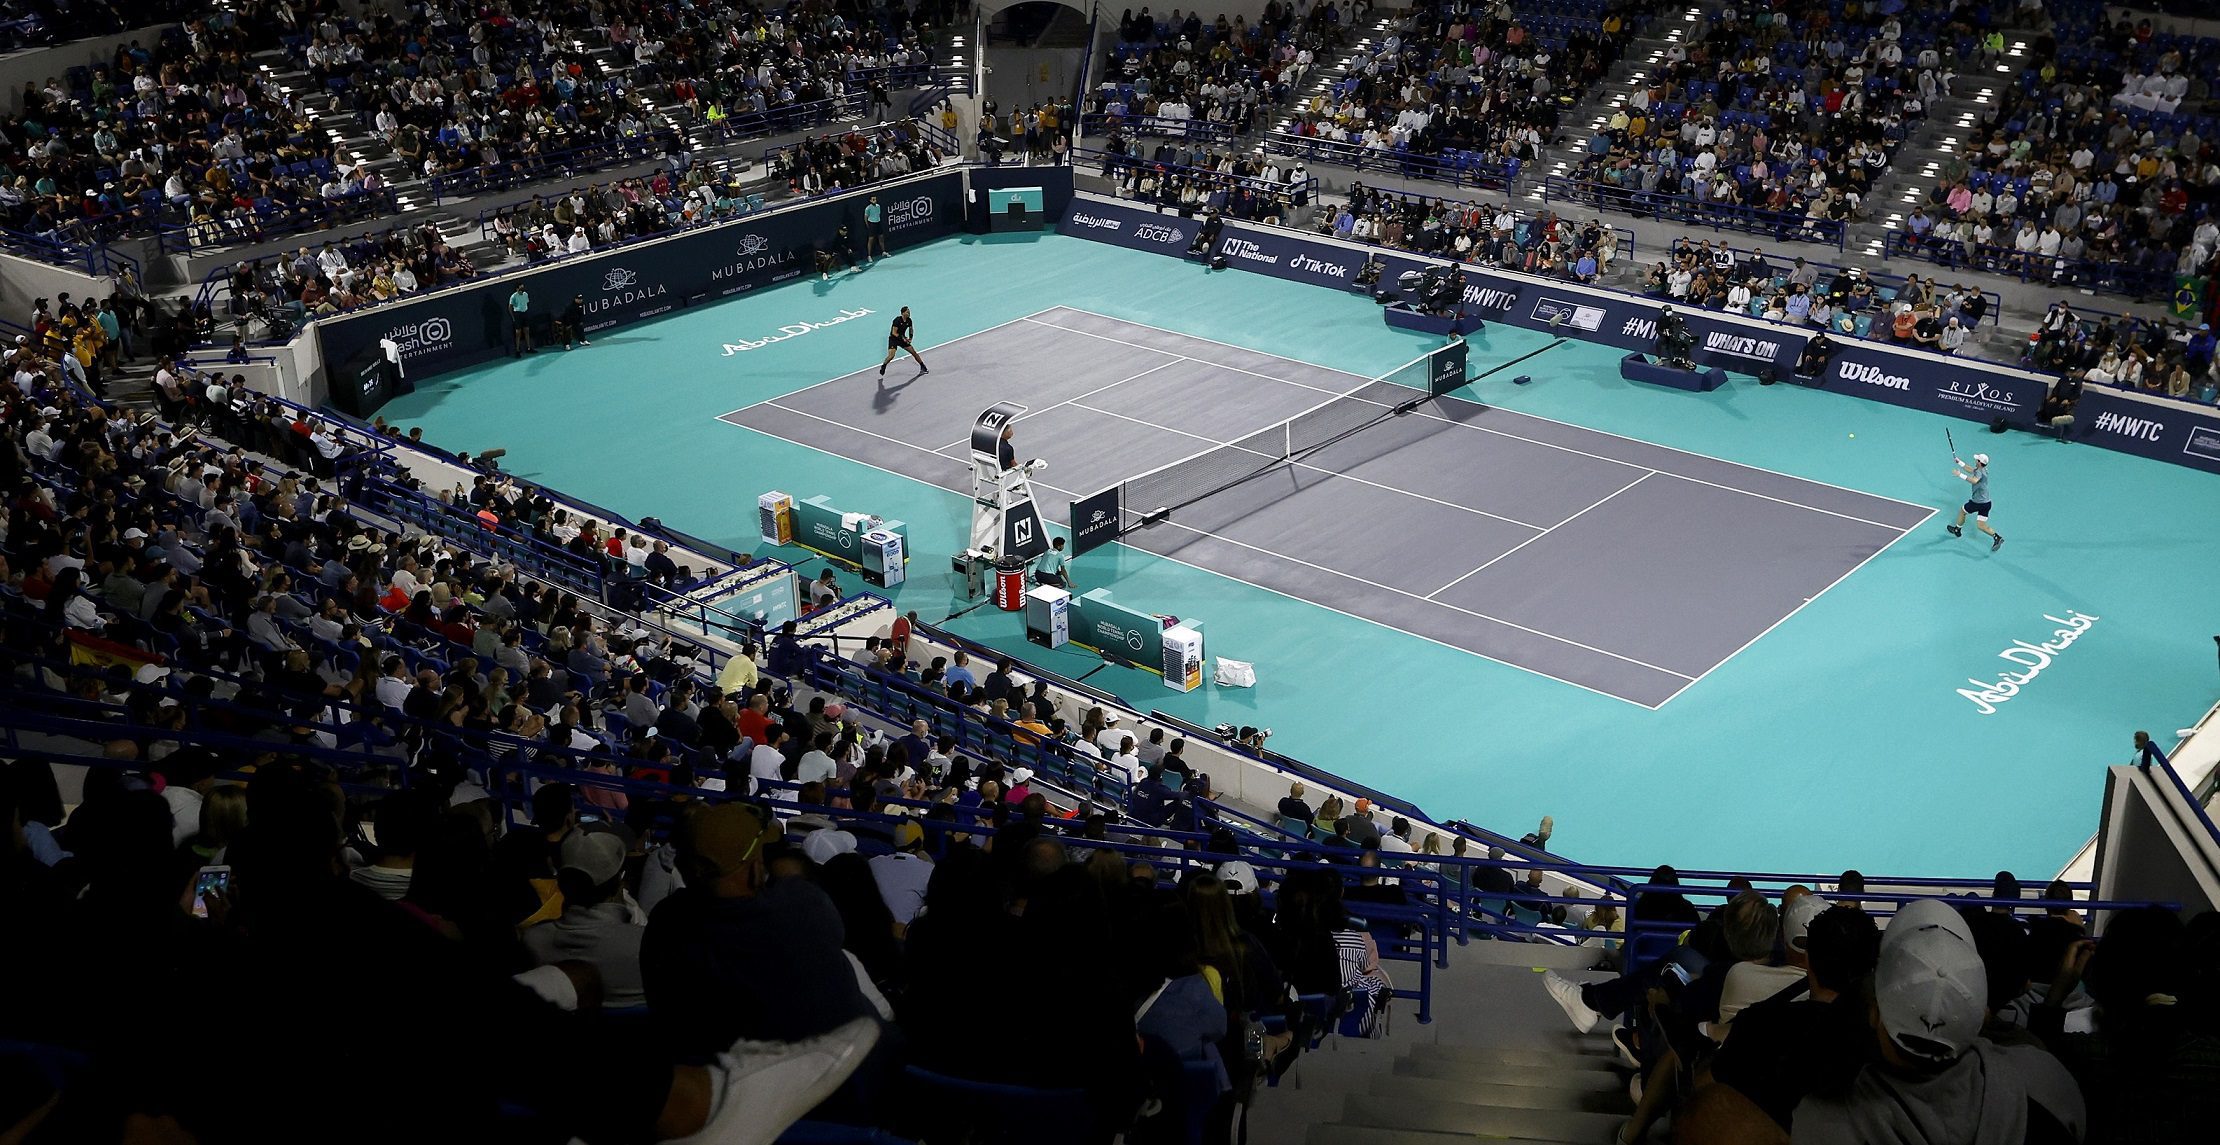 Mubadala World Tennis Championship will take place from 16 18 December at the International Tennis Centre at Zayed Sports City Abu Dhabi